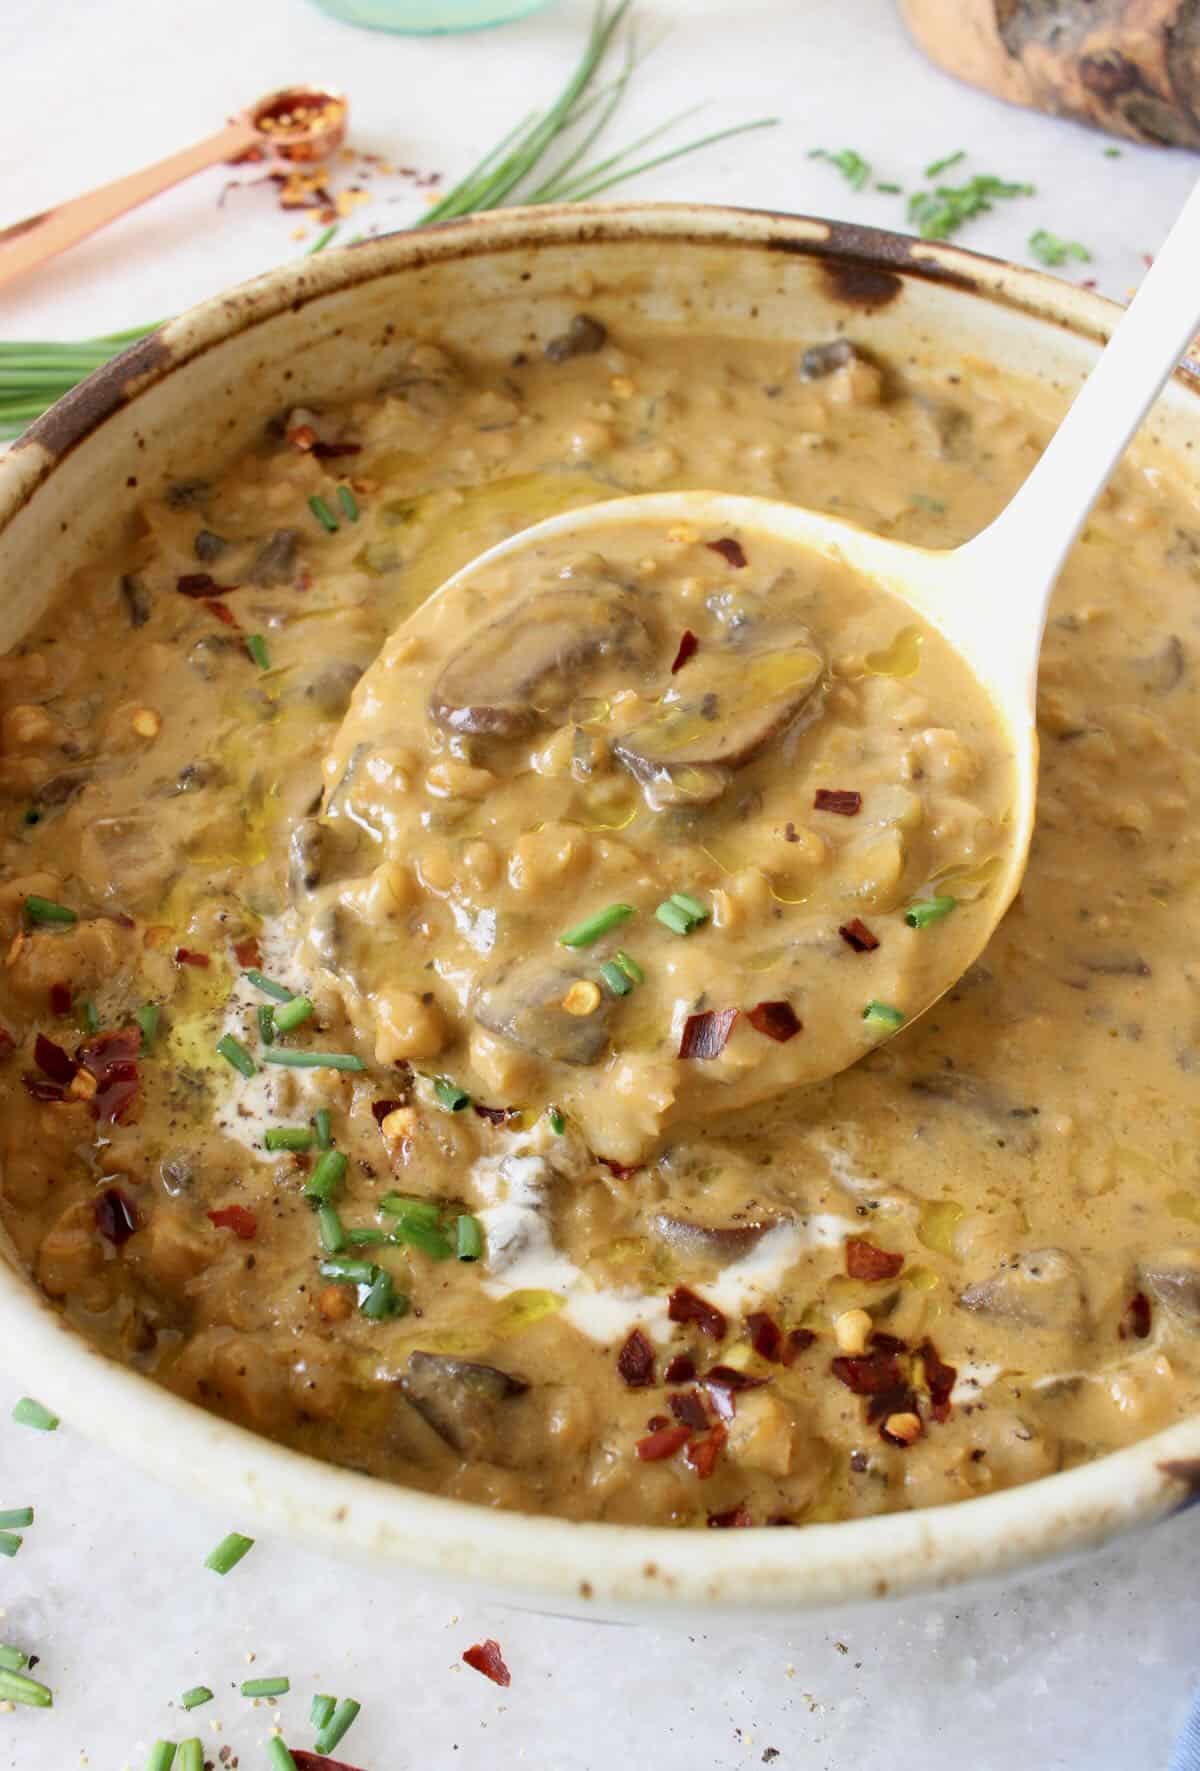 mushroom barley soup with leeks, porcini broth and vegan sour cream